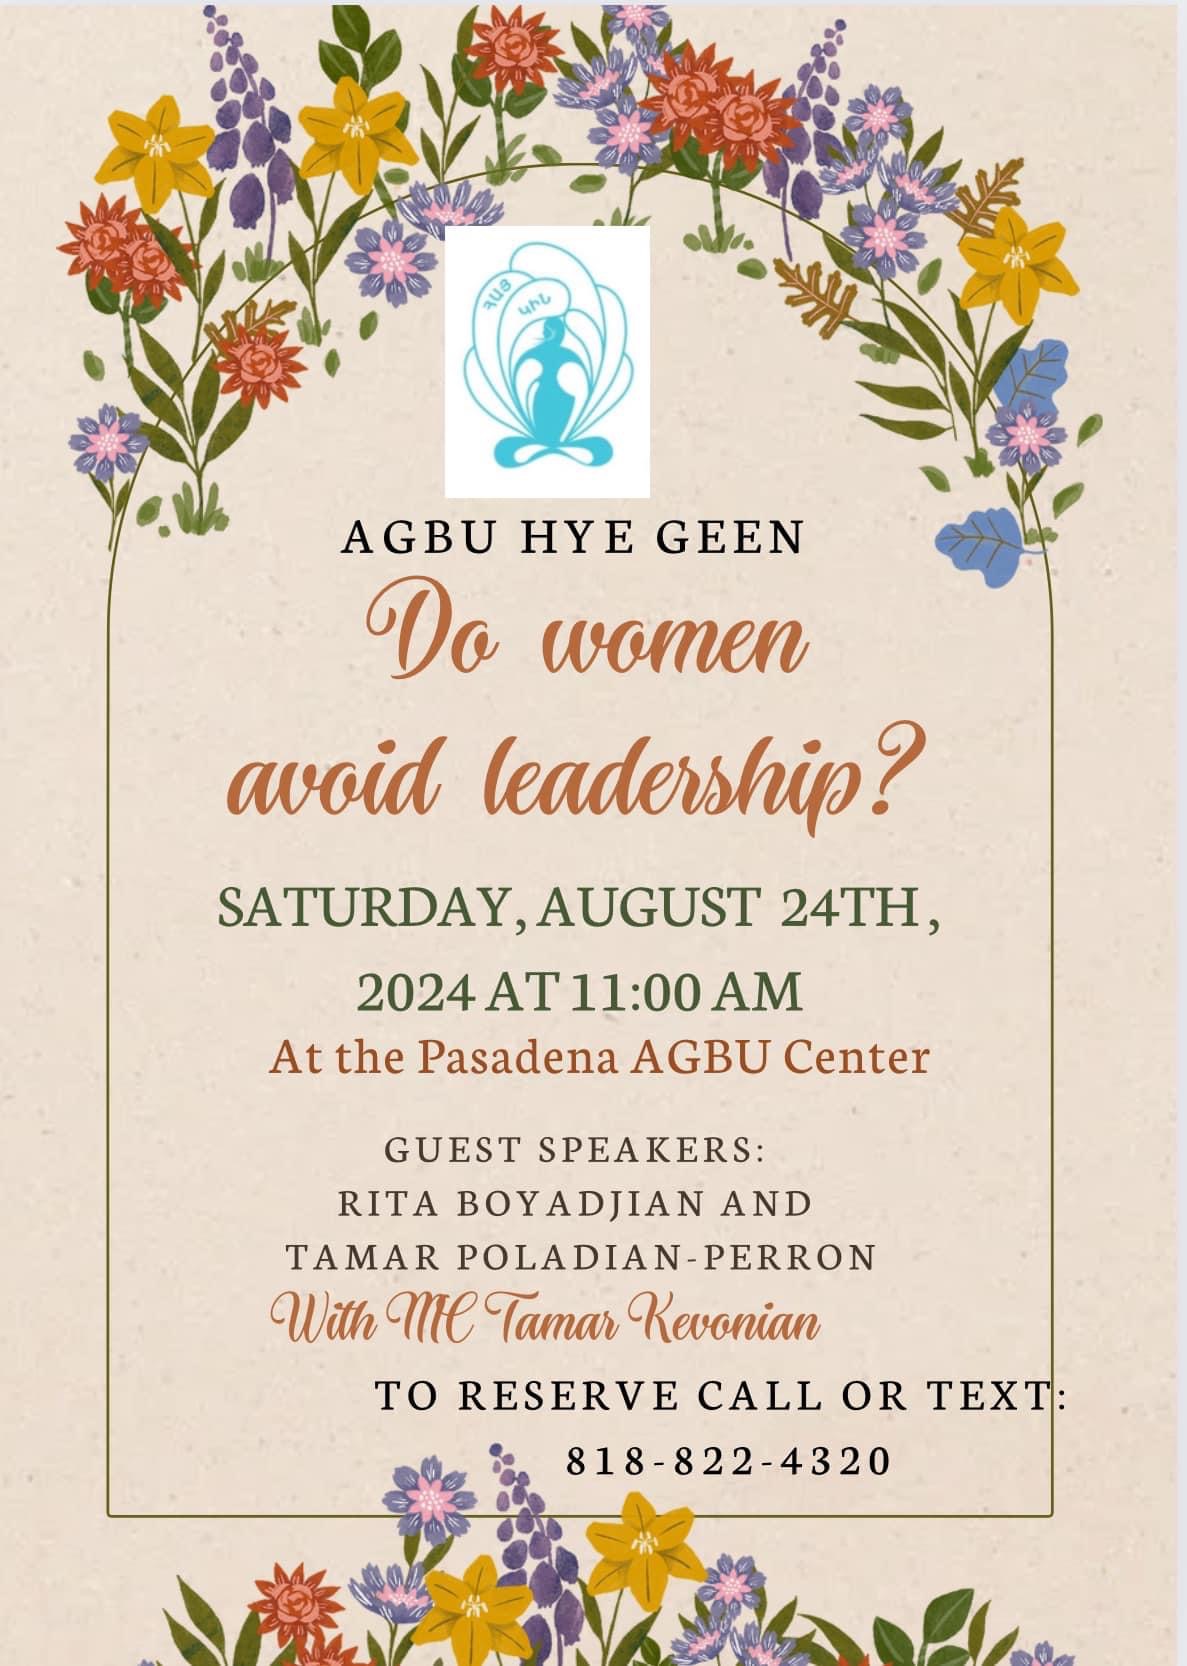 AGBU Hye Geen “Do Women Avoid Leadership?”